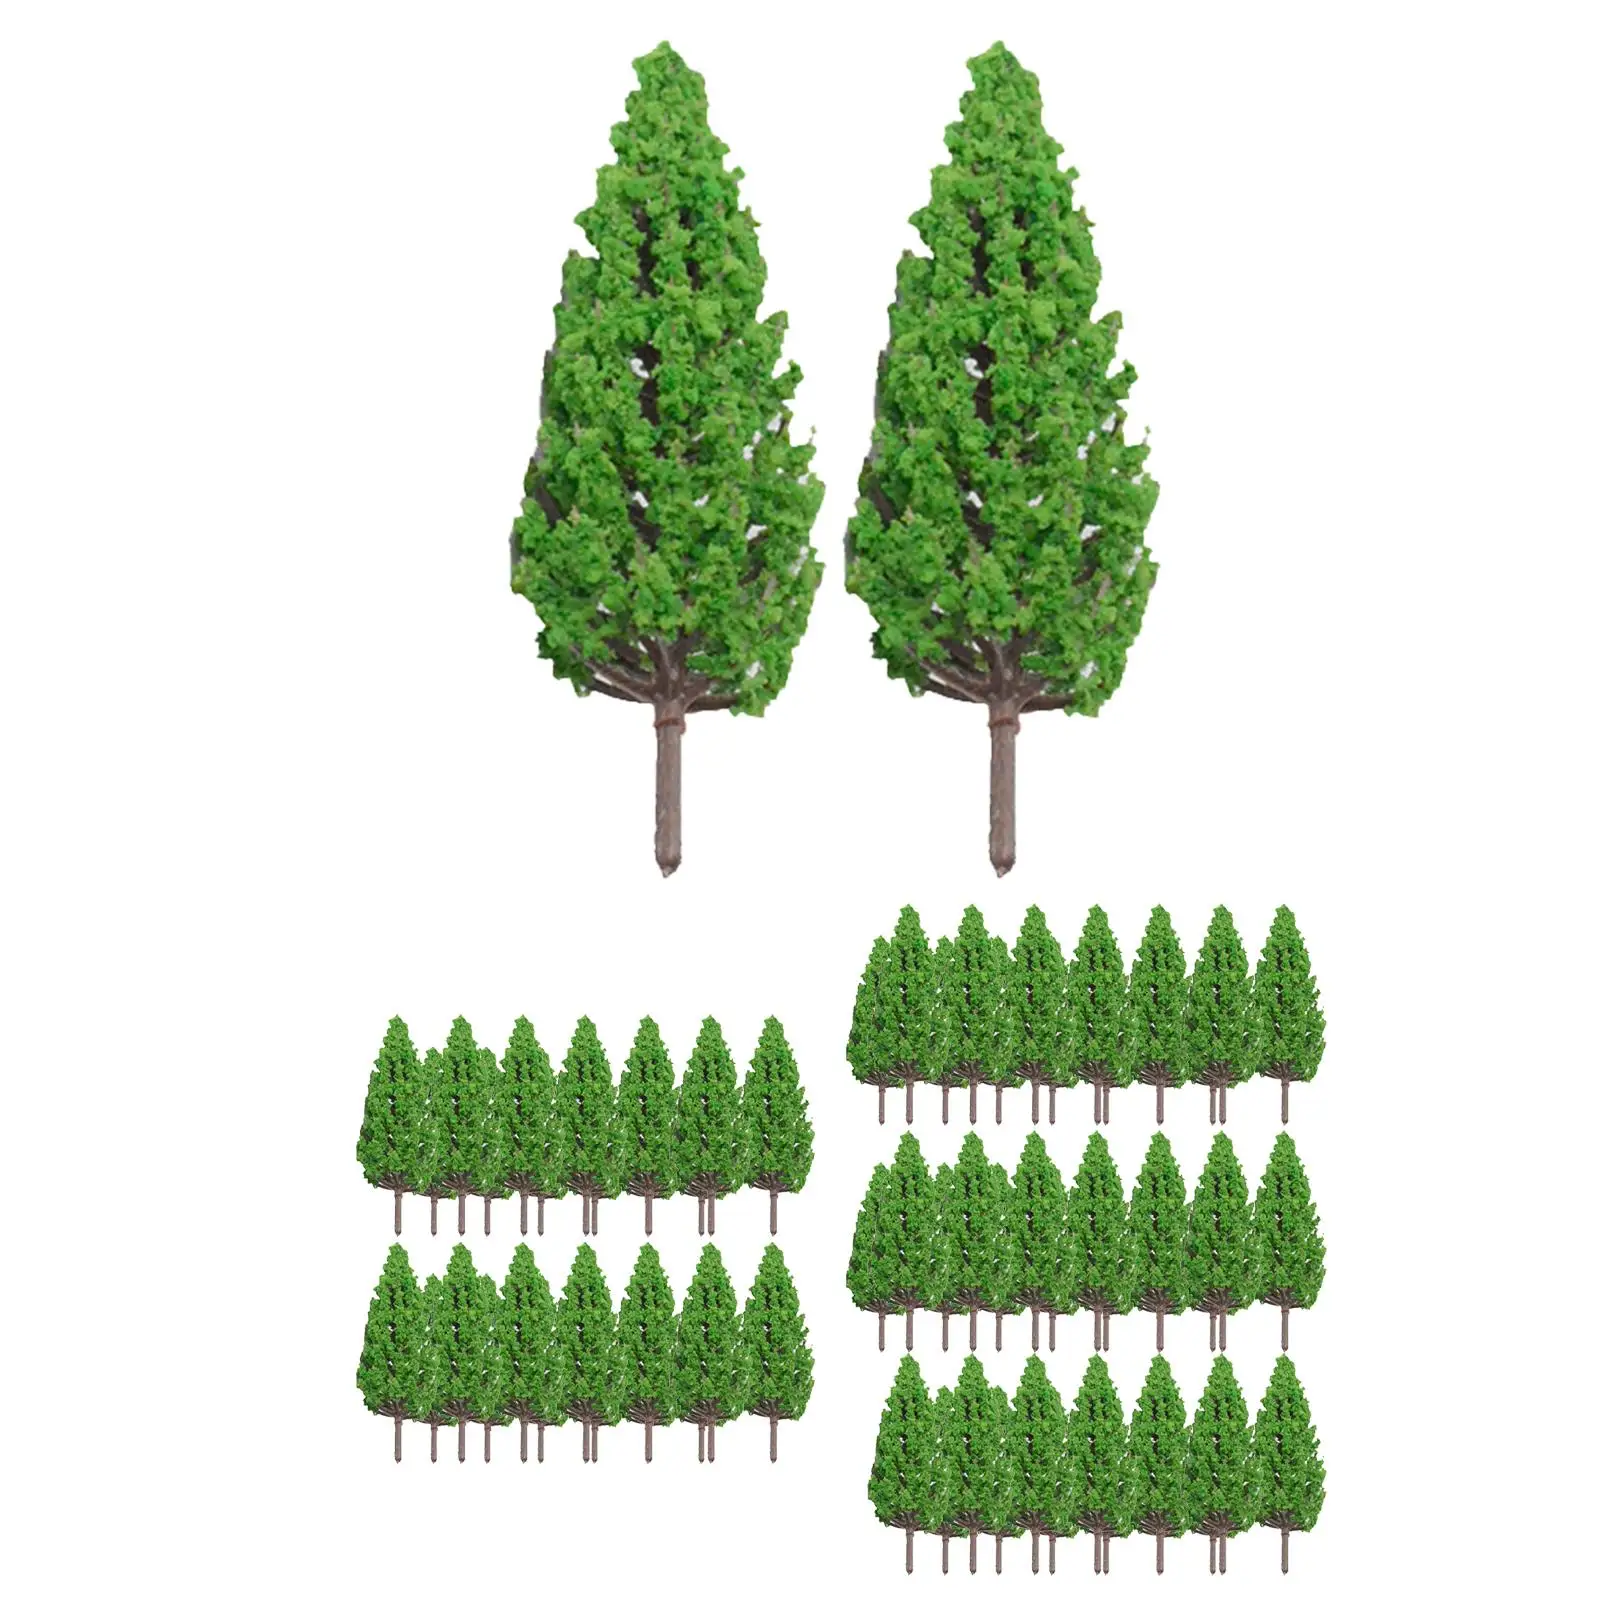 70x Mini Landscape Tree Model Trees for DIY Crafts Railroad Scenery Building Model Diorama Layout Miniature Scenery